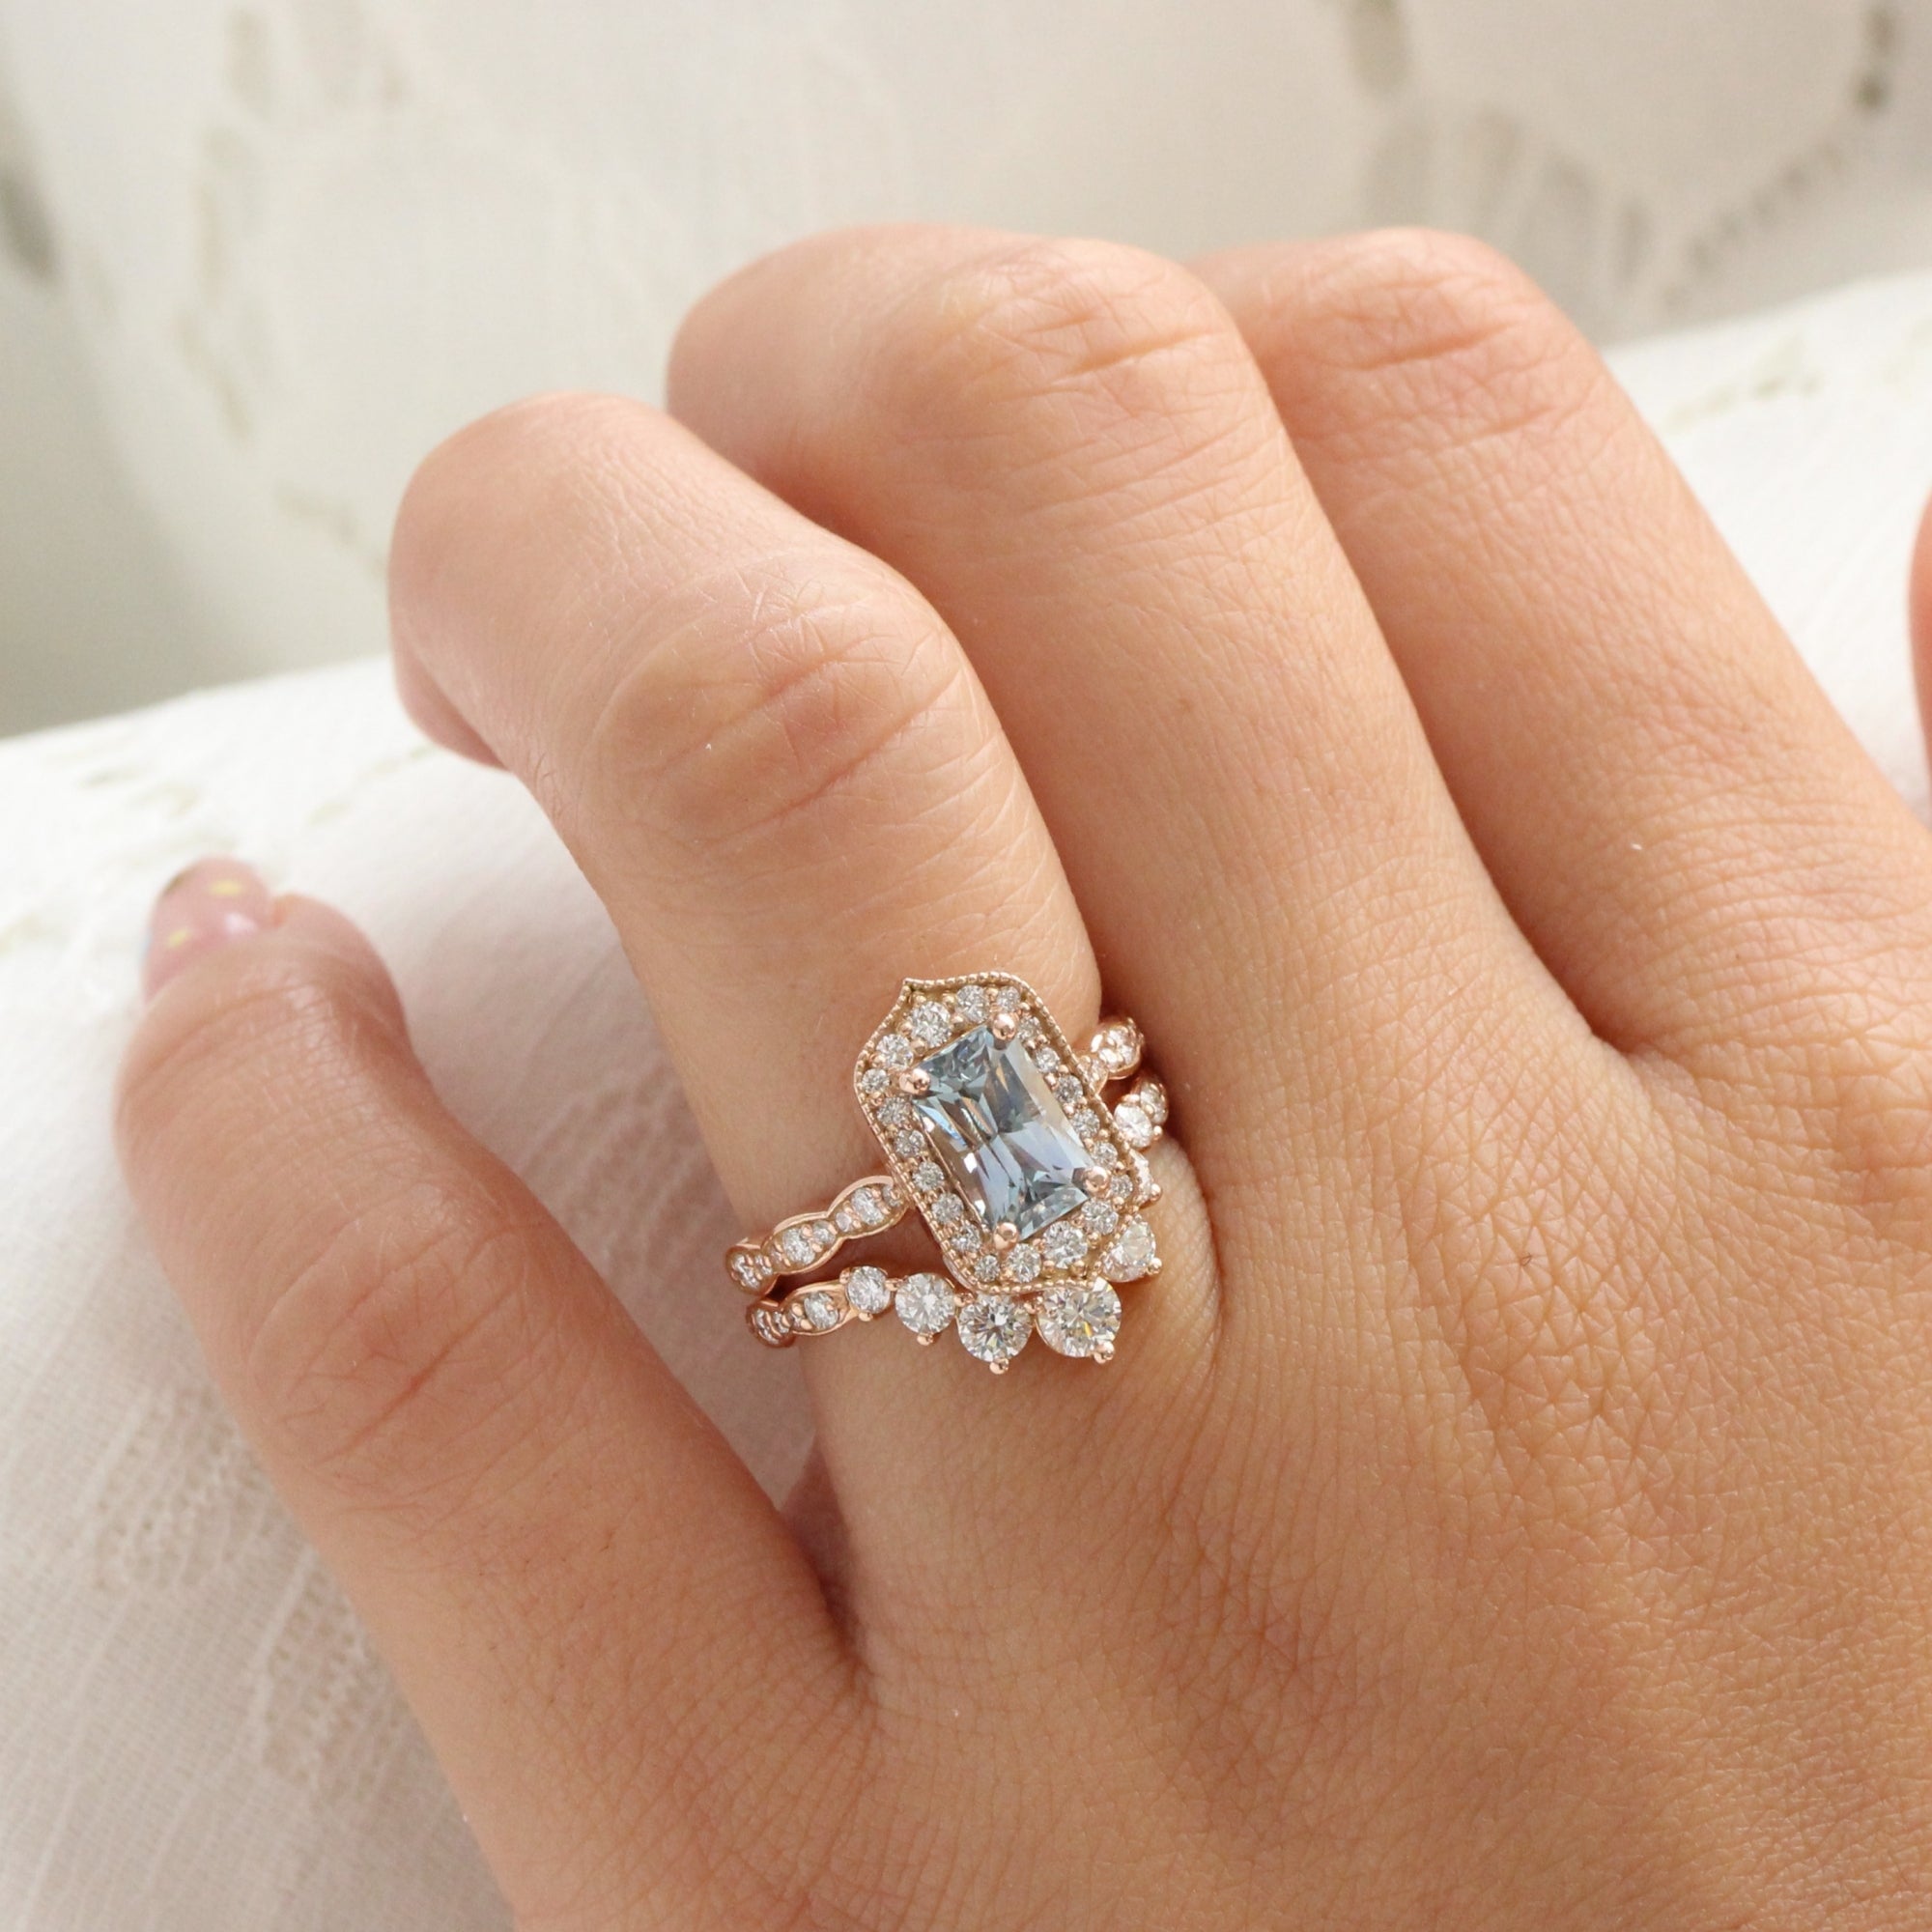 emerald cut aqua blue sapphire ring rose gold vintage halo diamond ring la more design jewelry